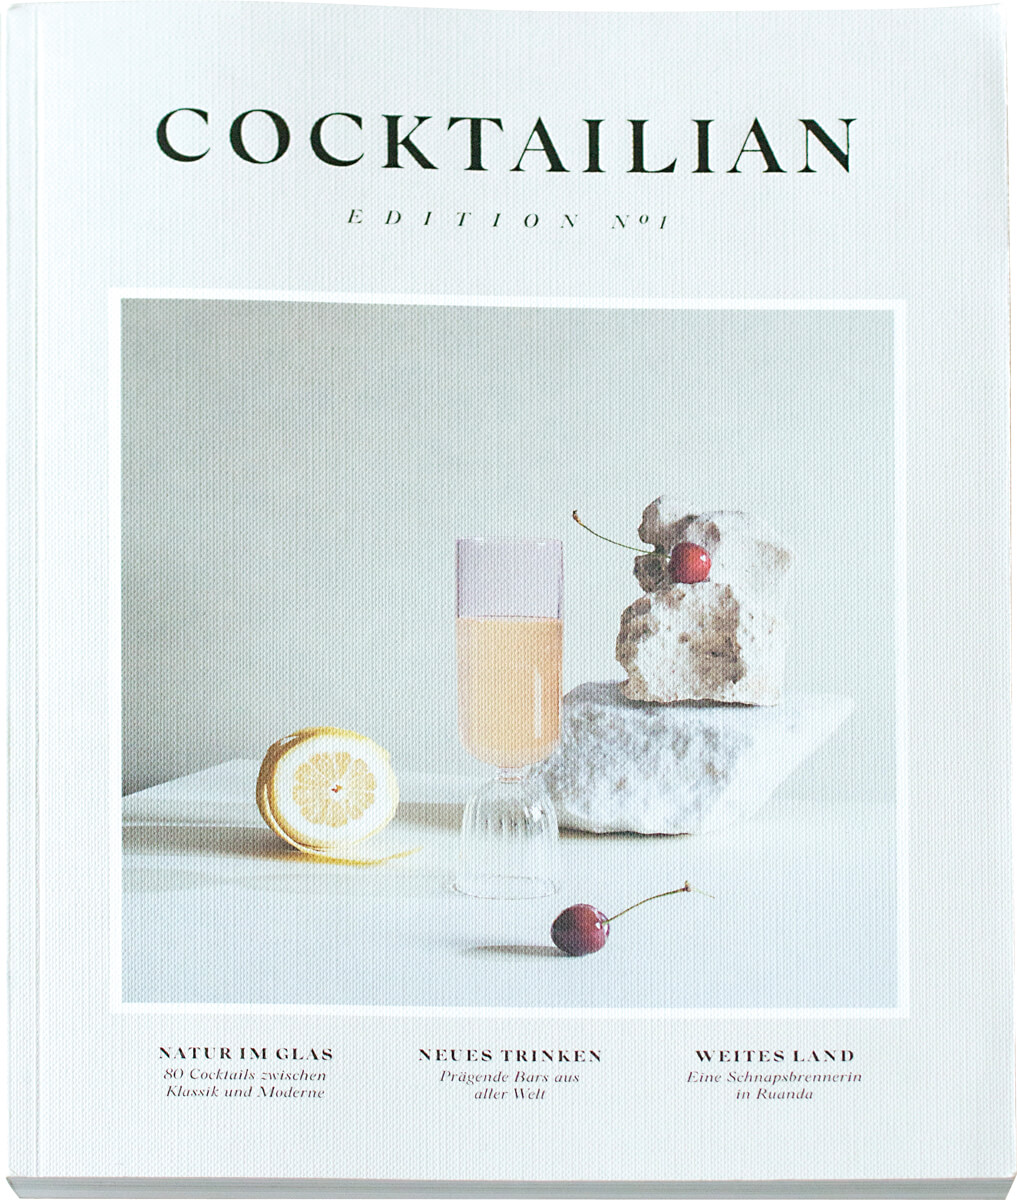 Cocktailian Edition Nº1 - bookazine